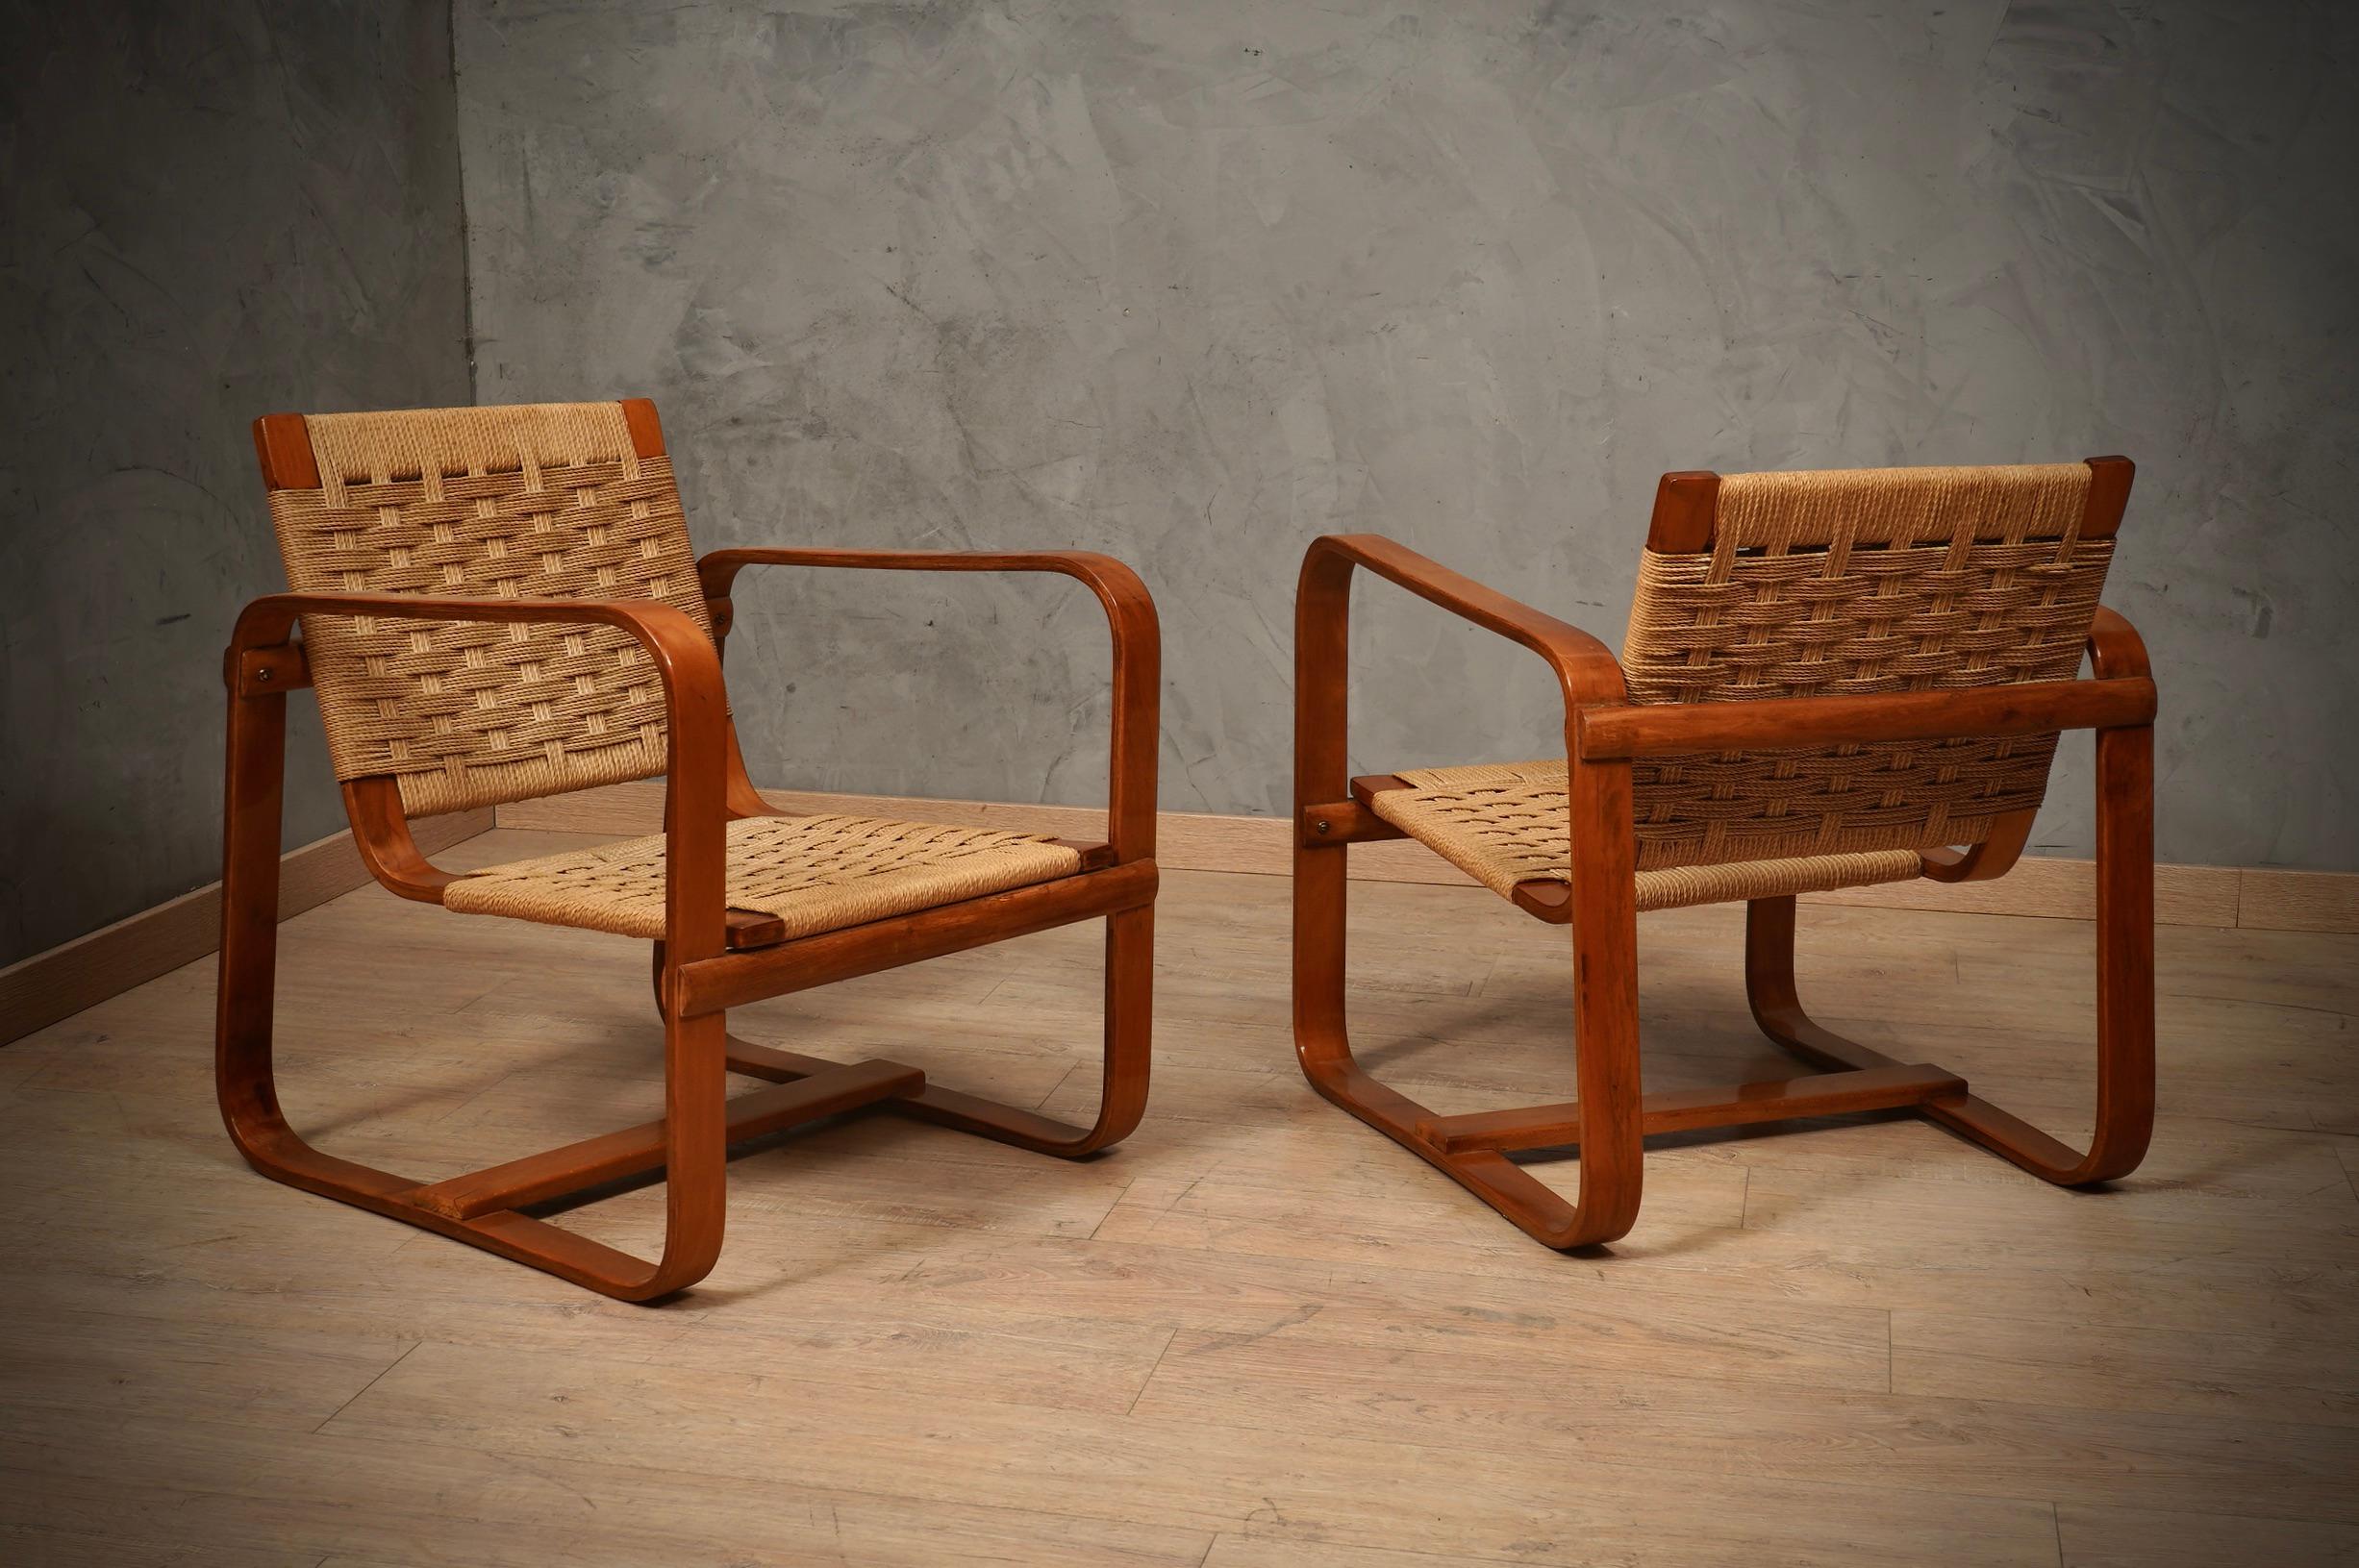 Giuseppe Pagano Pogatschnig e Gino Maggioni Italian Club Chair Armchairs, 1940 For Sale 1